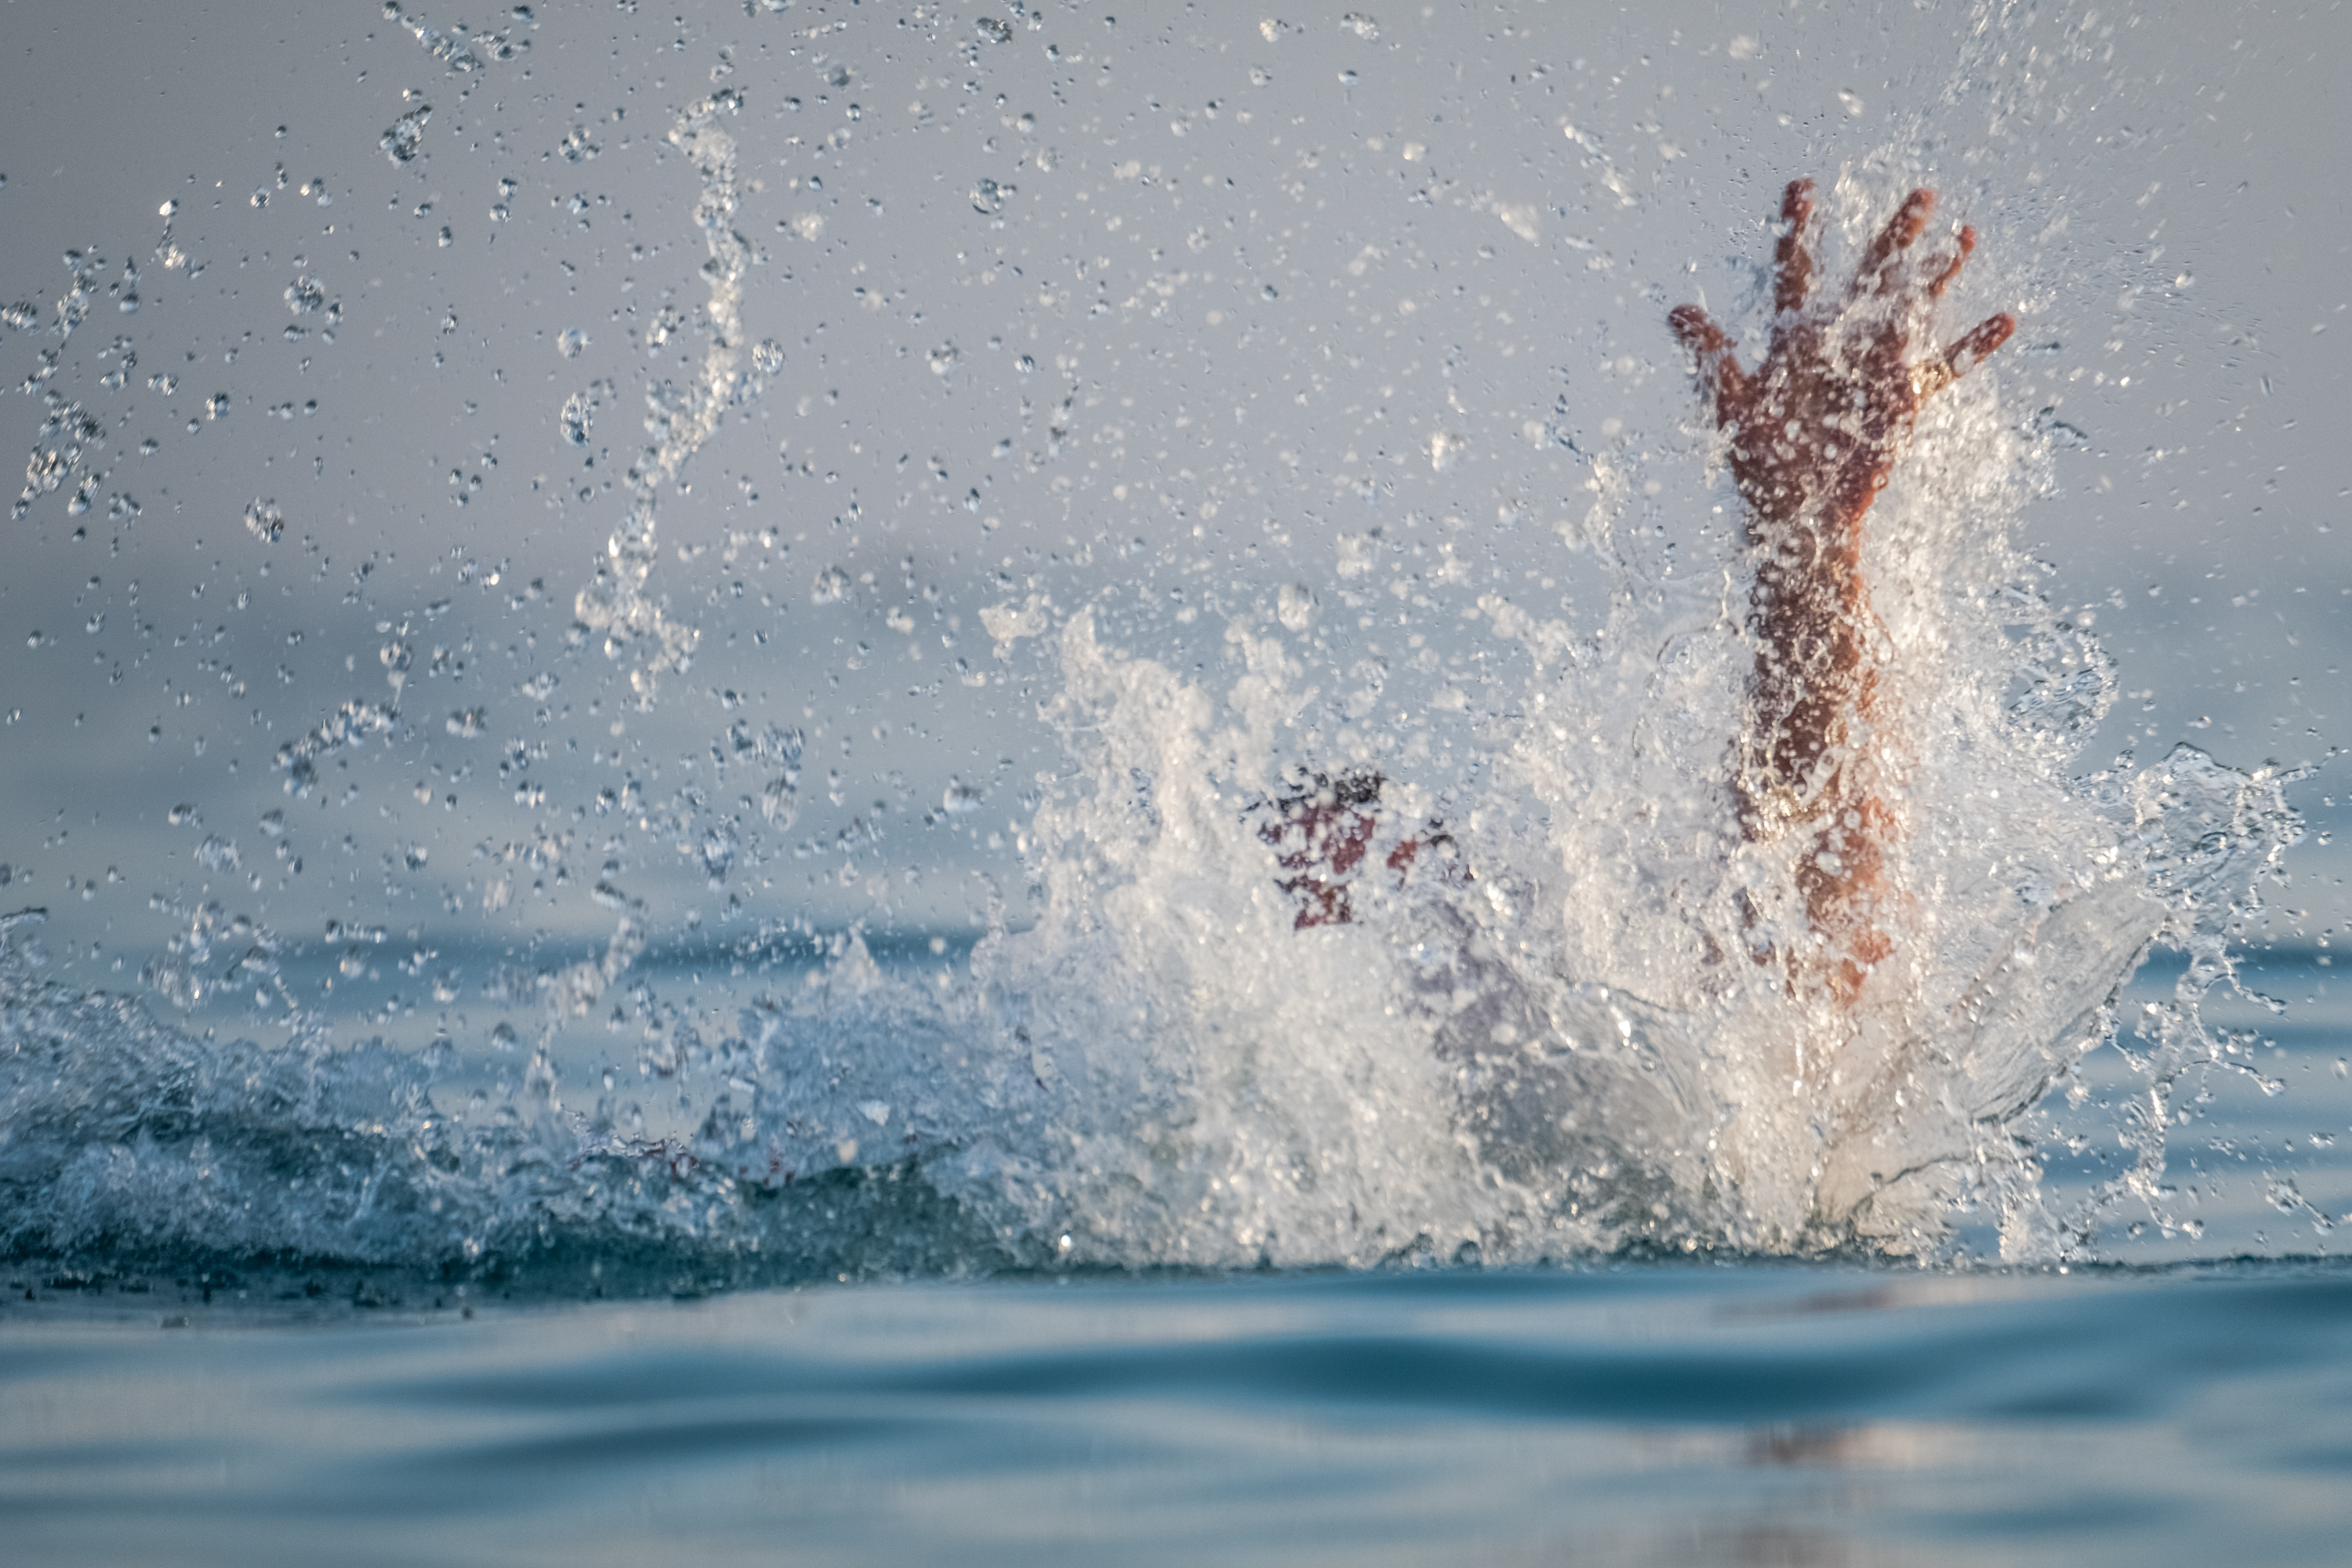 Drowning | Source: Shutterstock